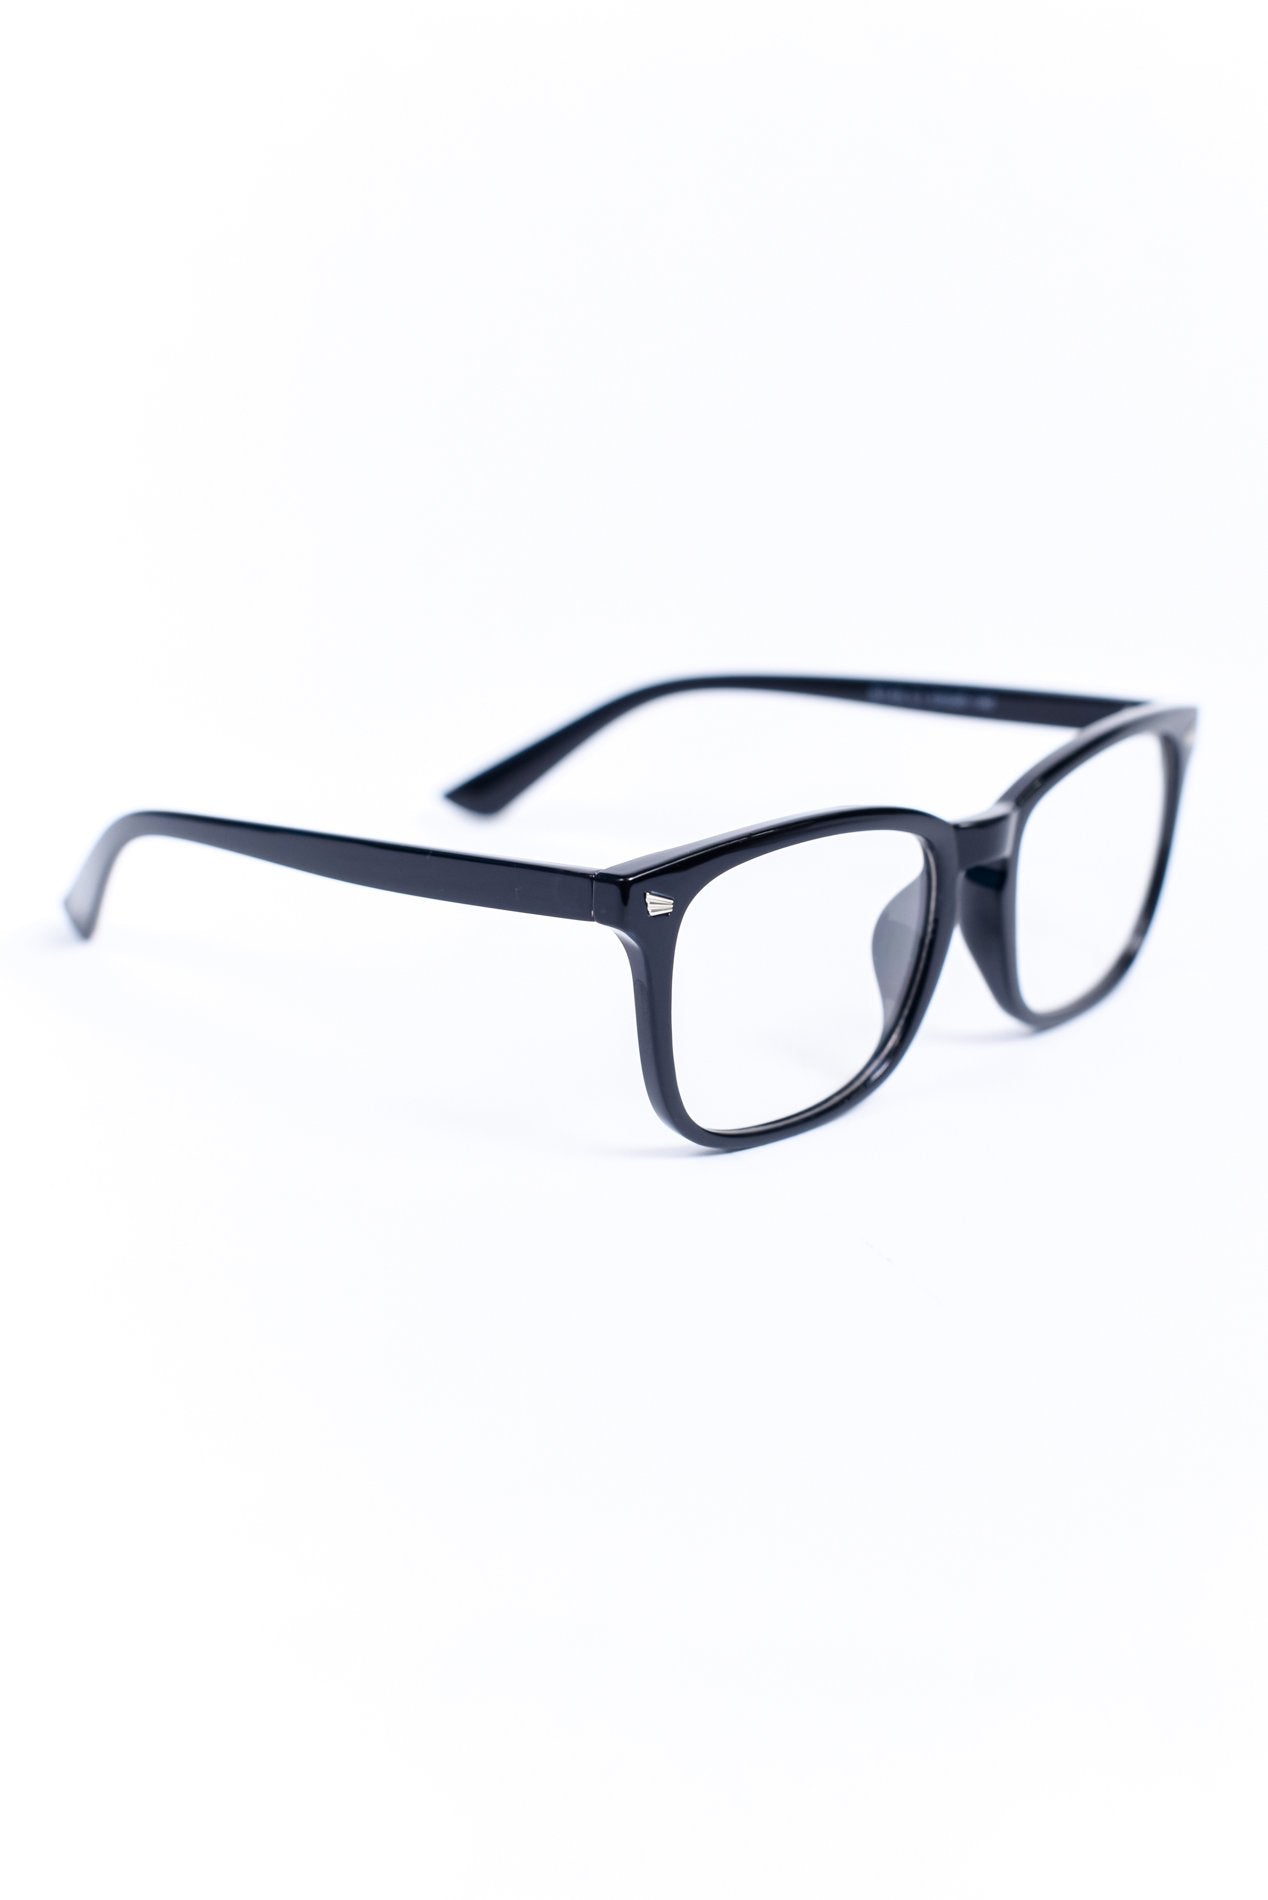 Blue Light Glasses (Free Black Case) - BLG002